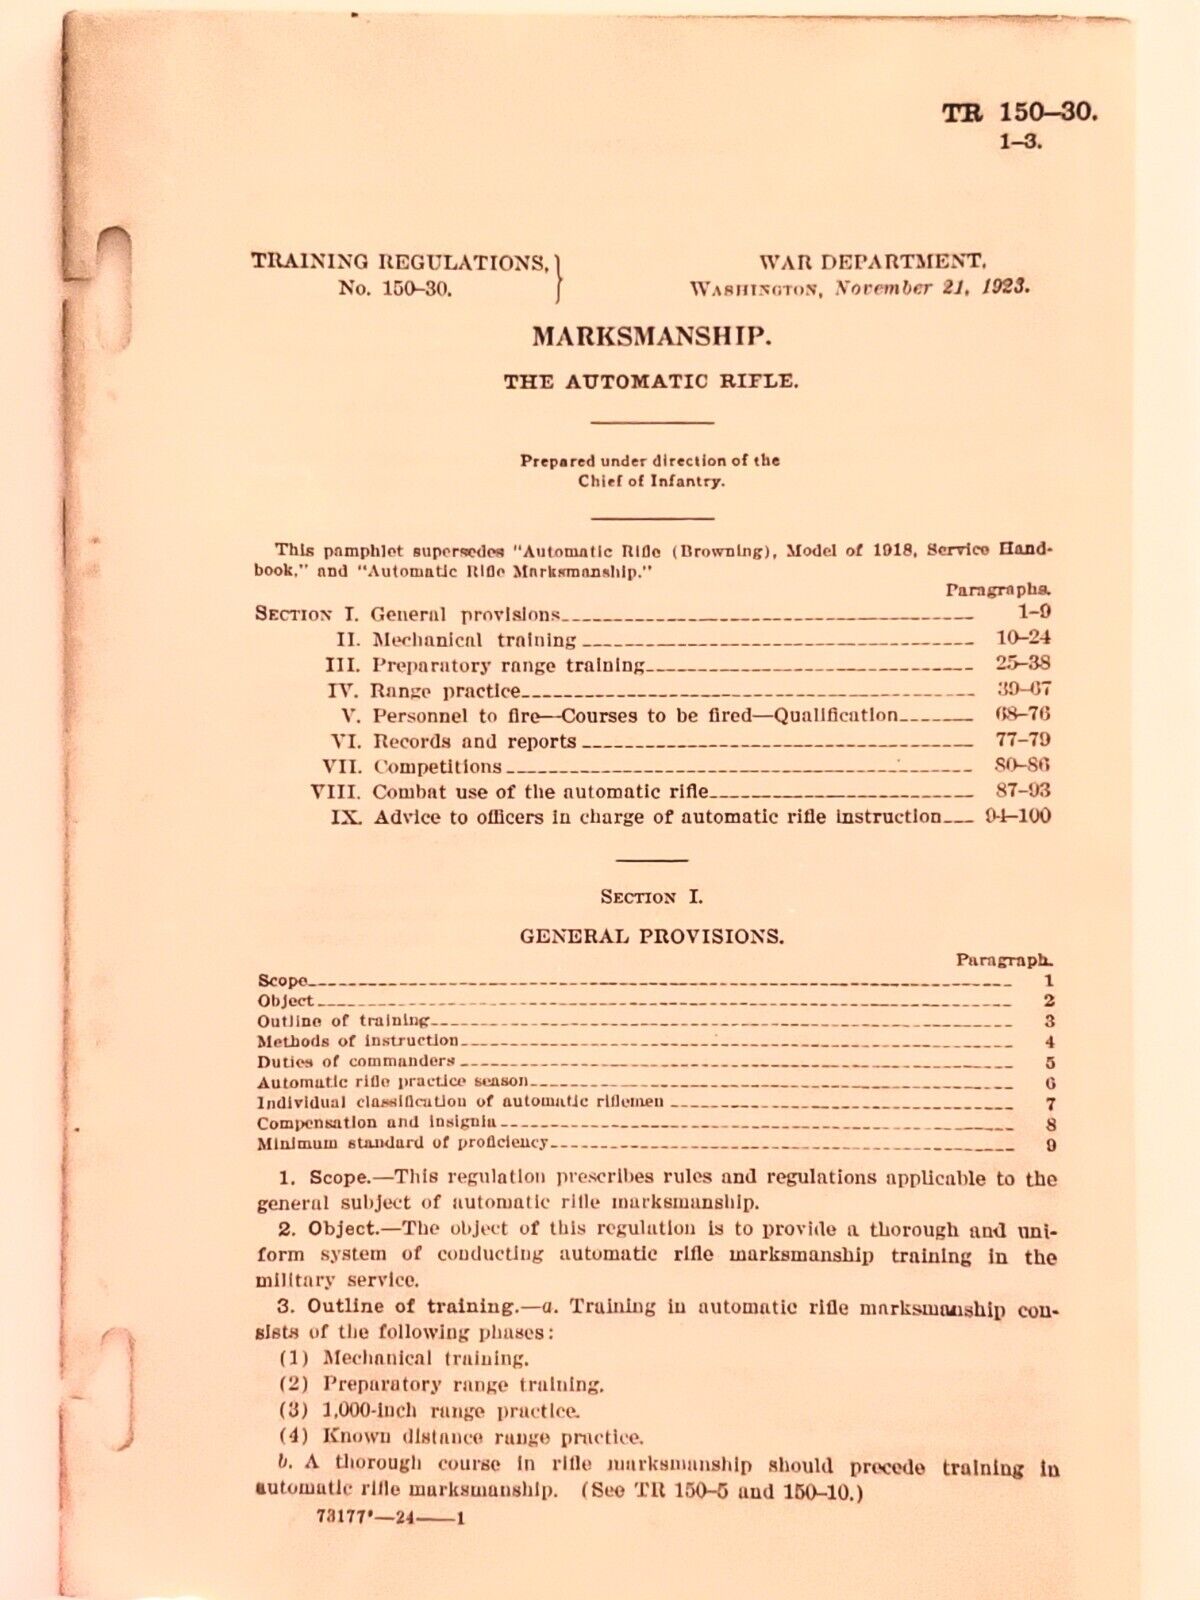 Interwar Training Regulation - Marksmanship: The Automatic Rifle (1923)